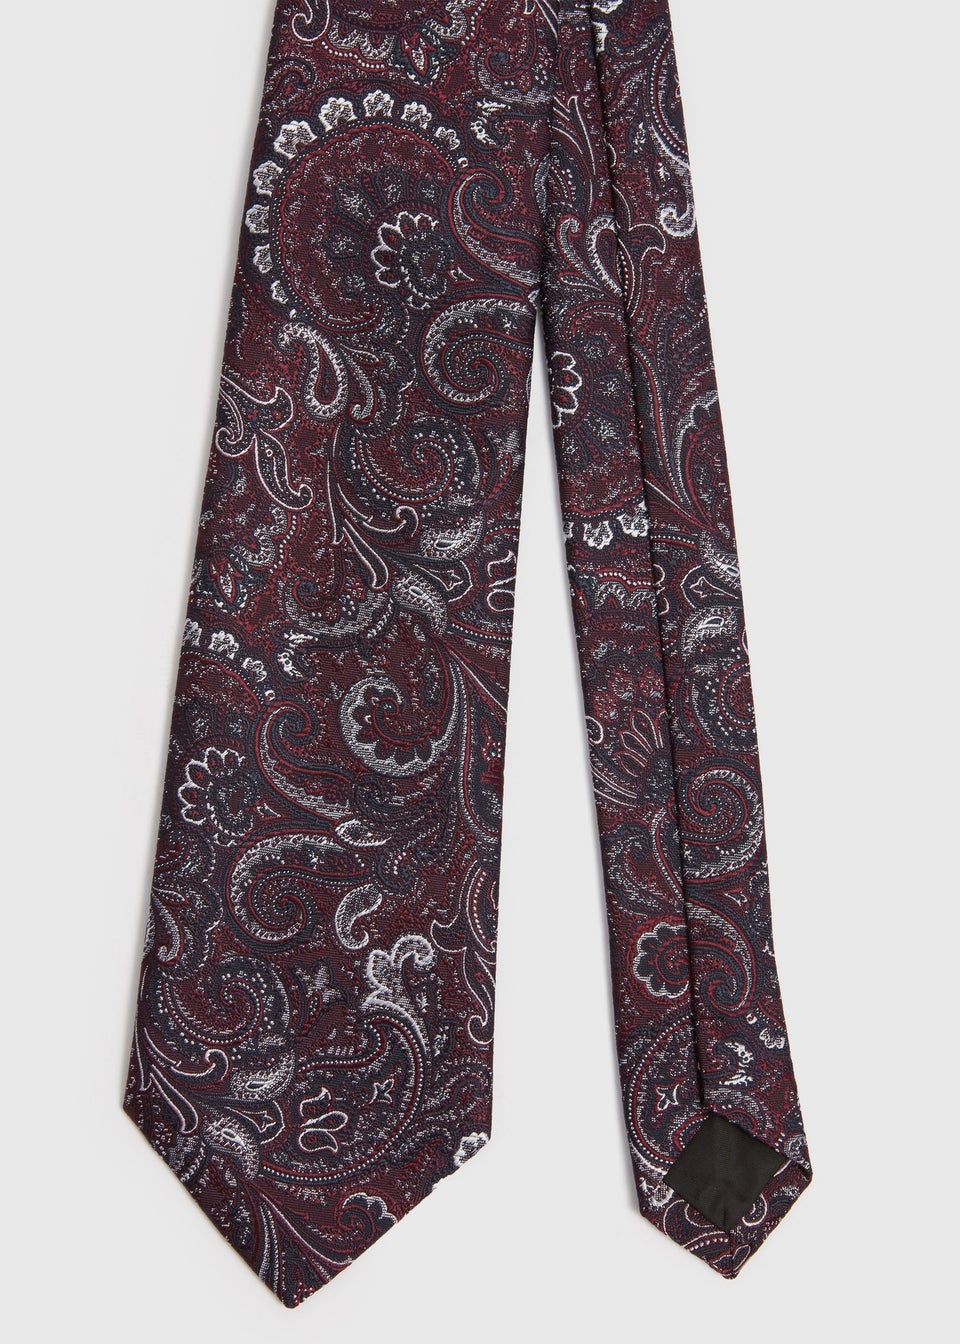 Taylor & Wright Burgundy Paisley Design Tie